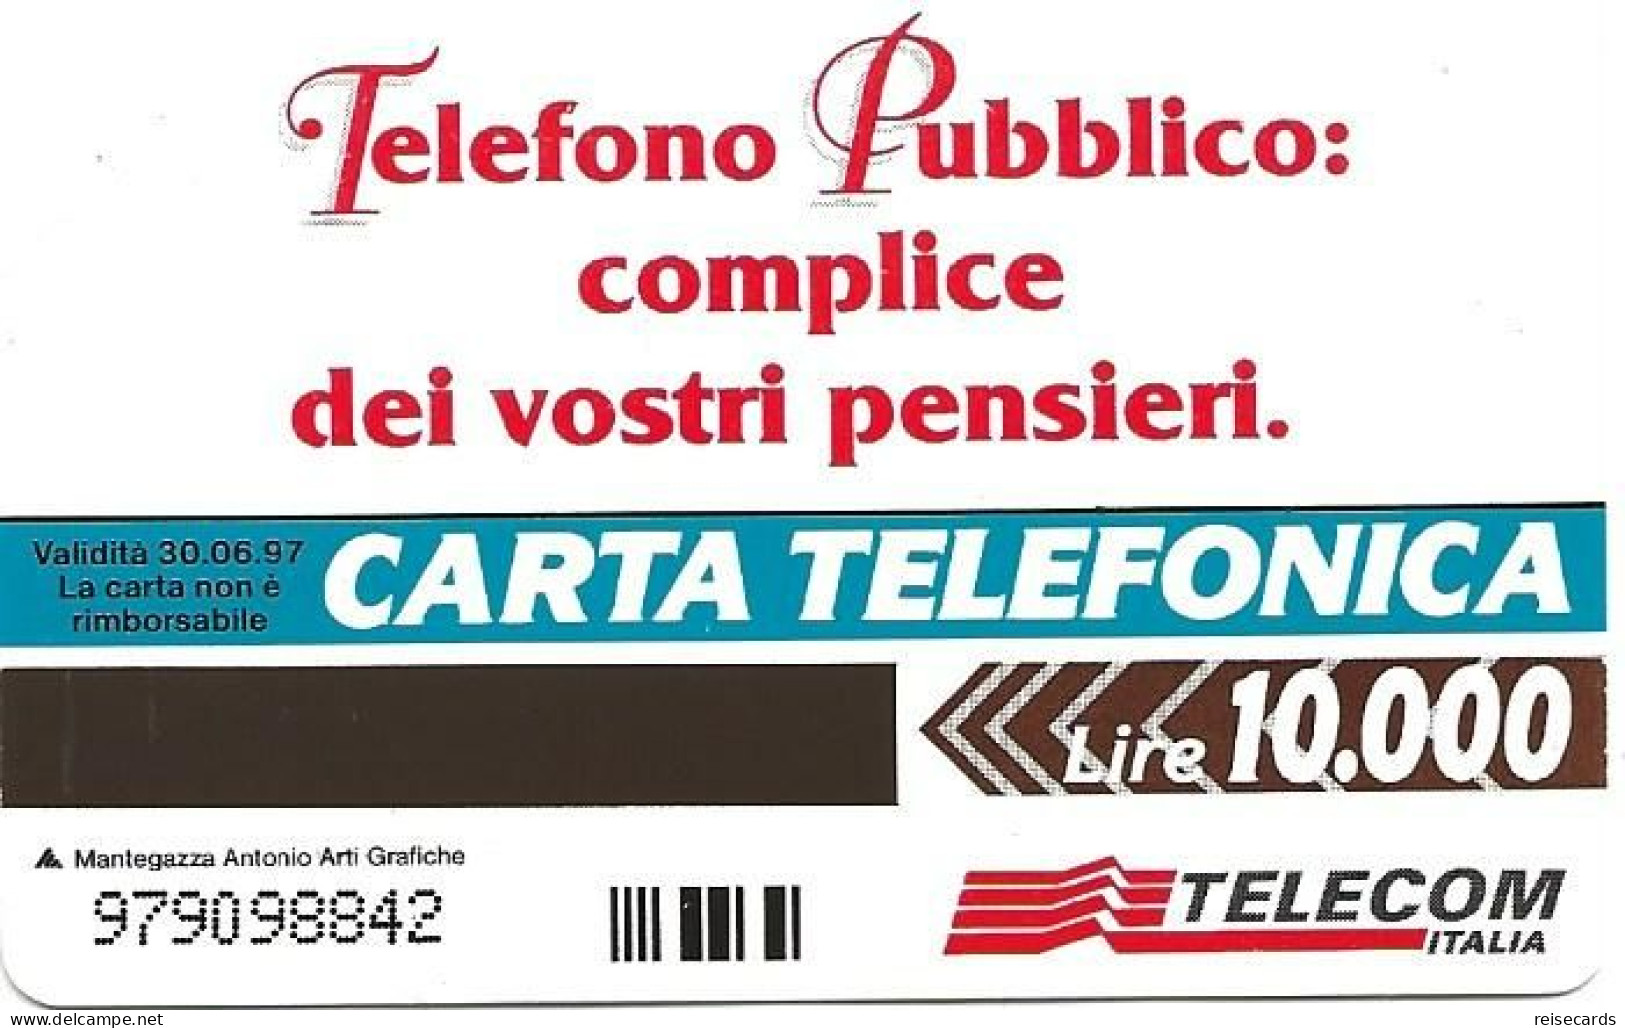 Italy: Telecom Italia - Telefono Pubblico - Publiques Publicitaires